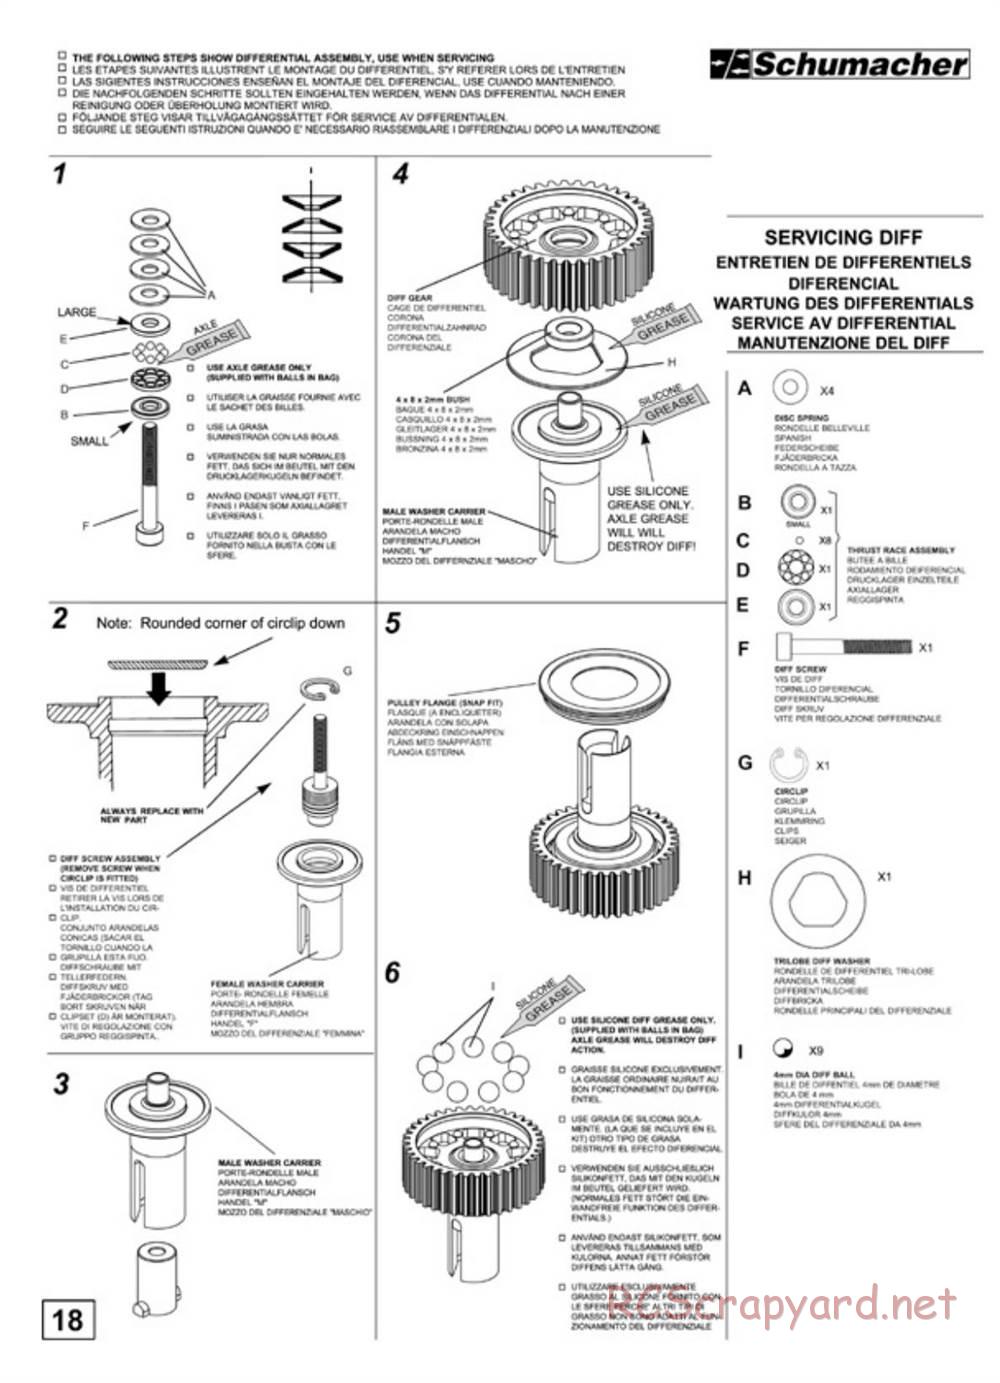 Schumacher - Fireblade Evo - Manual - Page 20